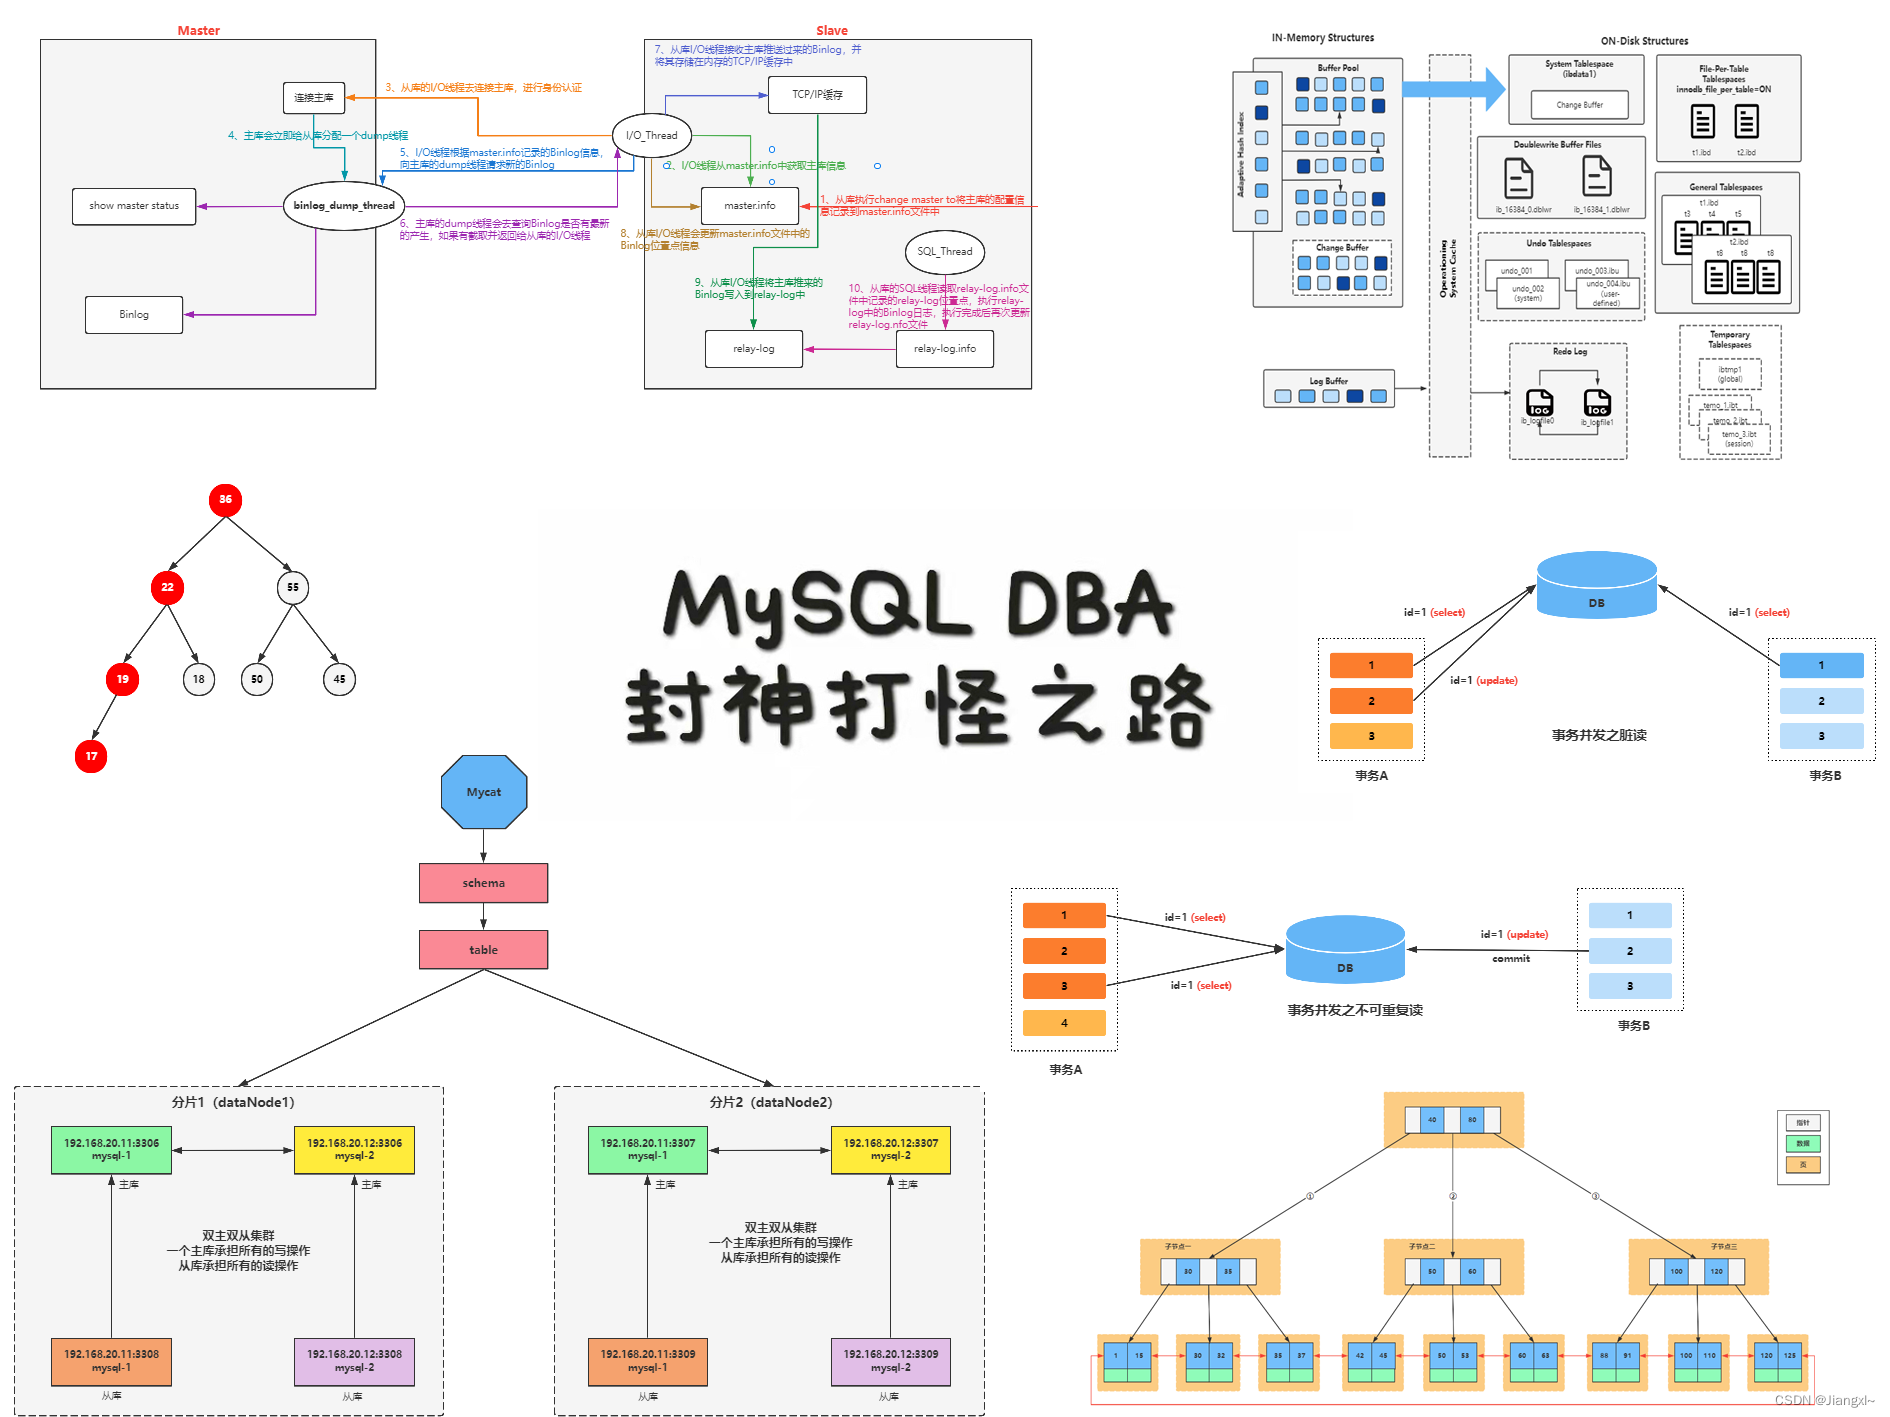 《MySQL DBA封神打怪之路》专栏学习大纲